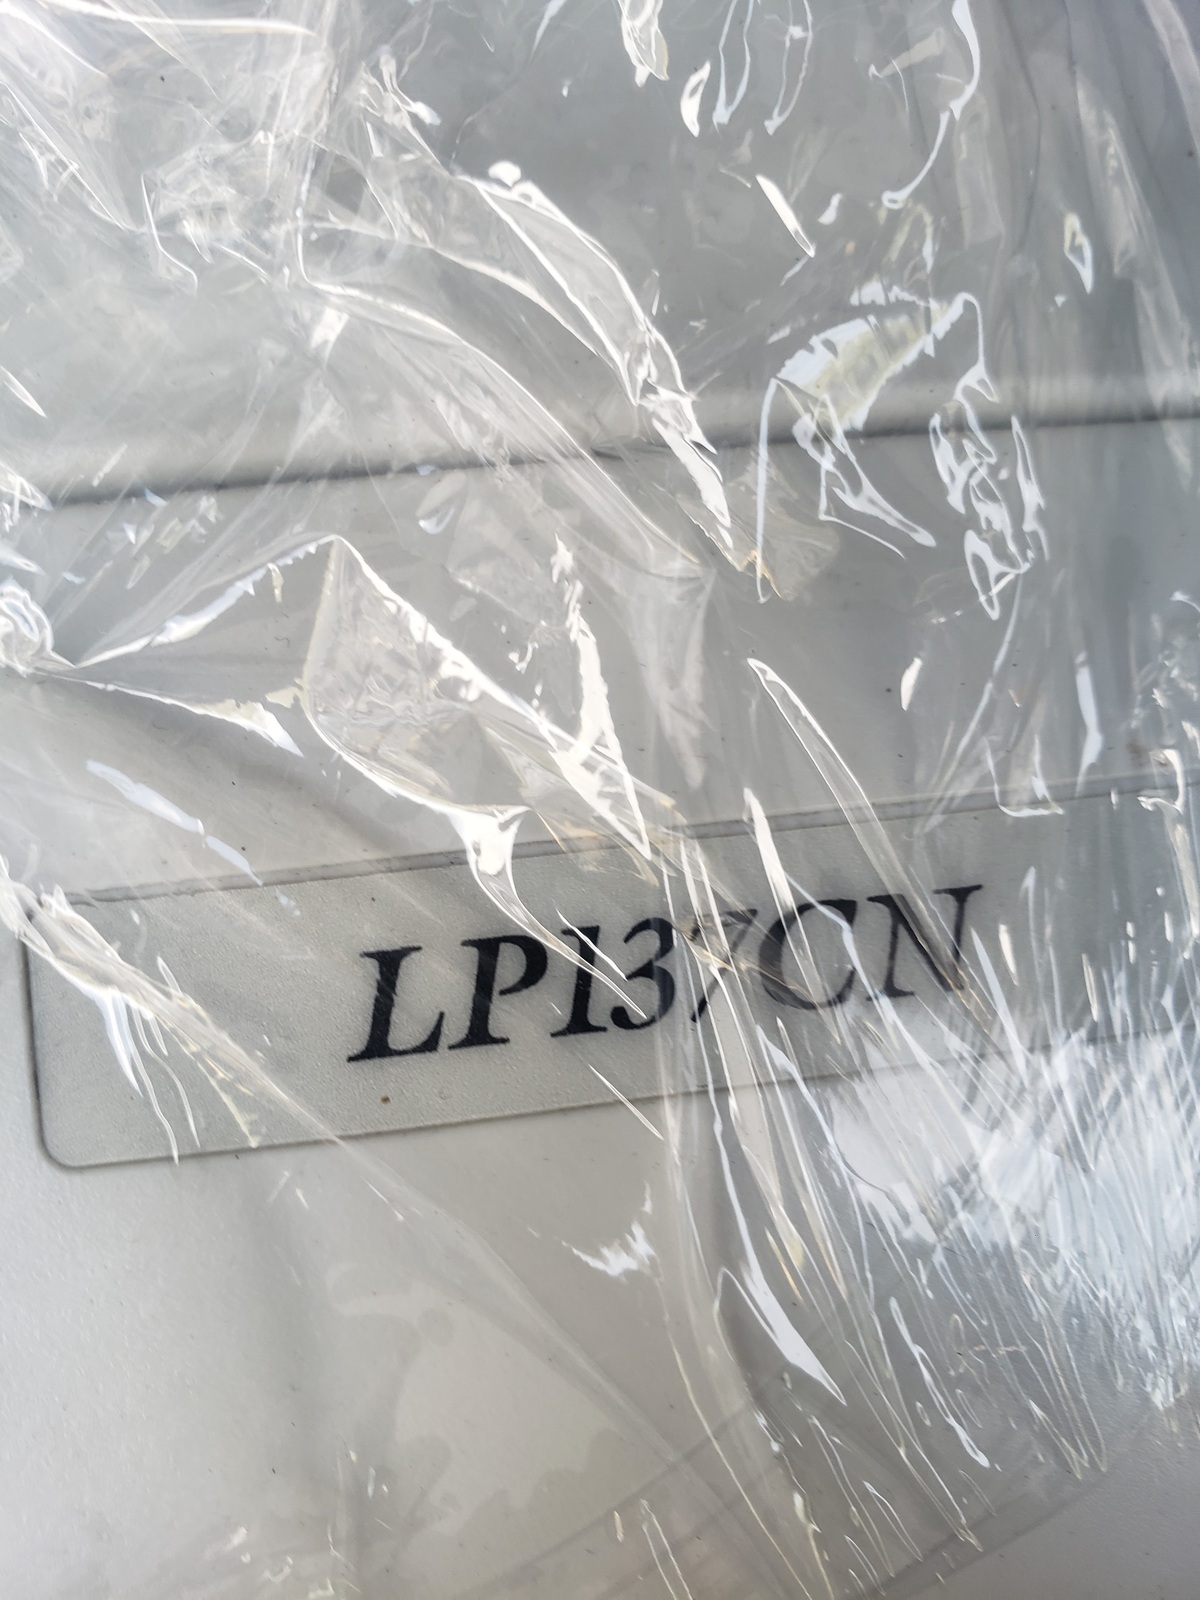 Lanier LP137CN/C430DN Color Laser Printer - $999.00